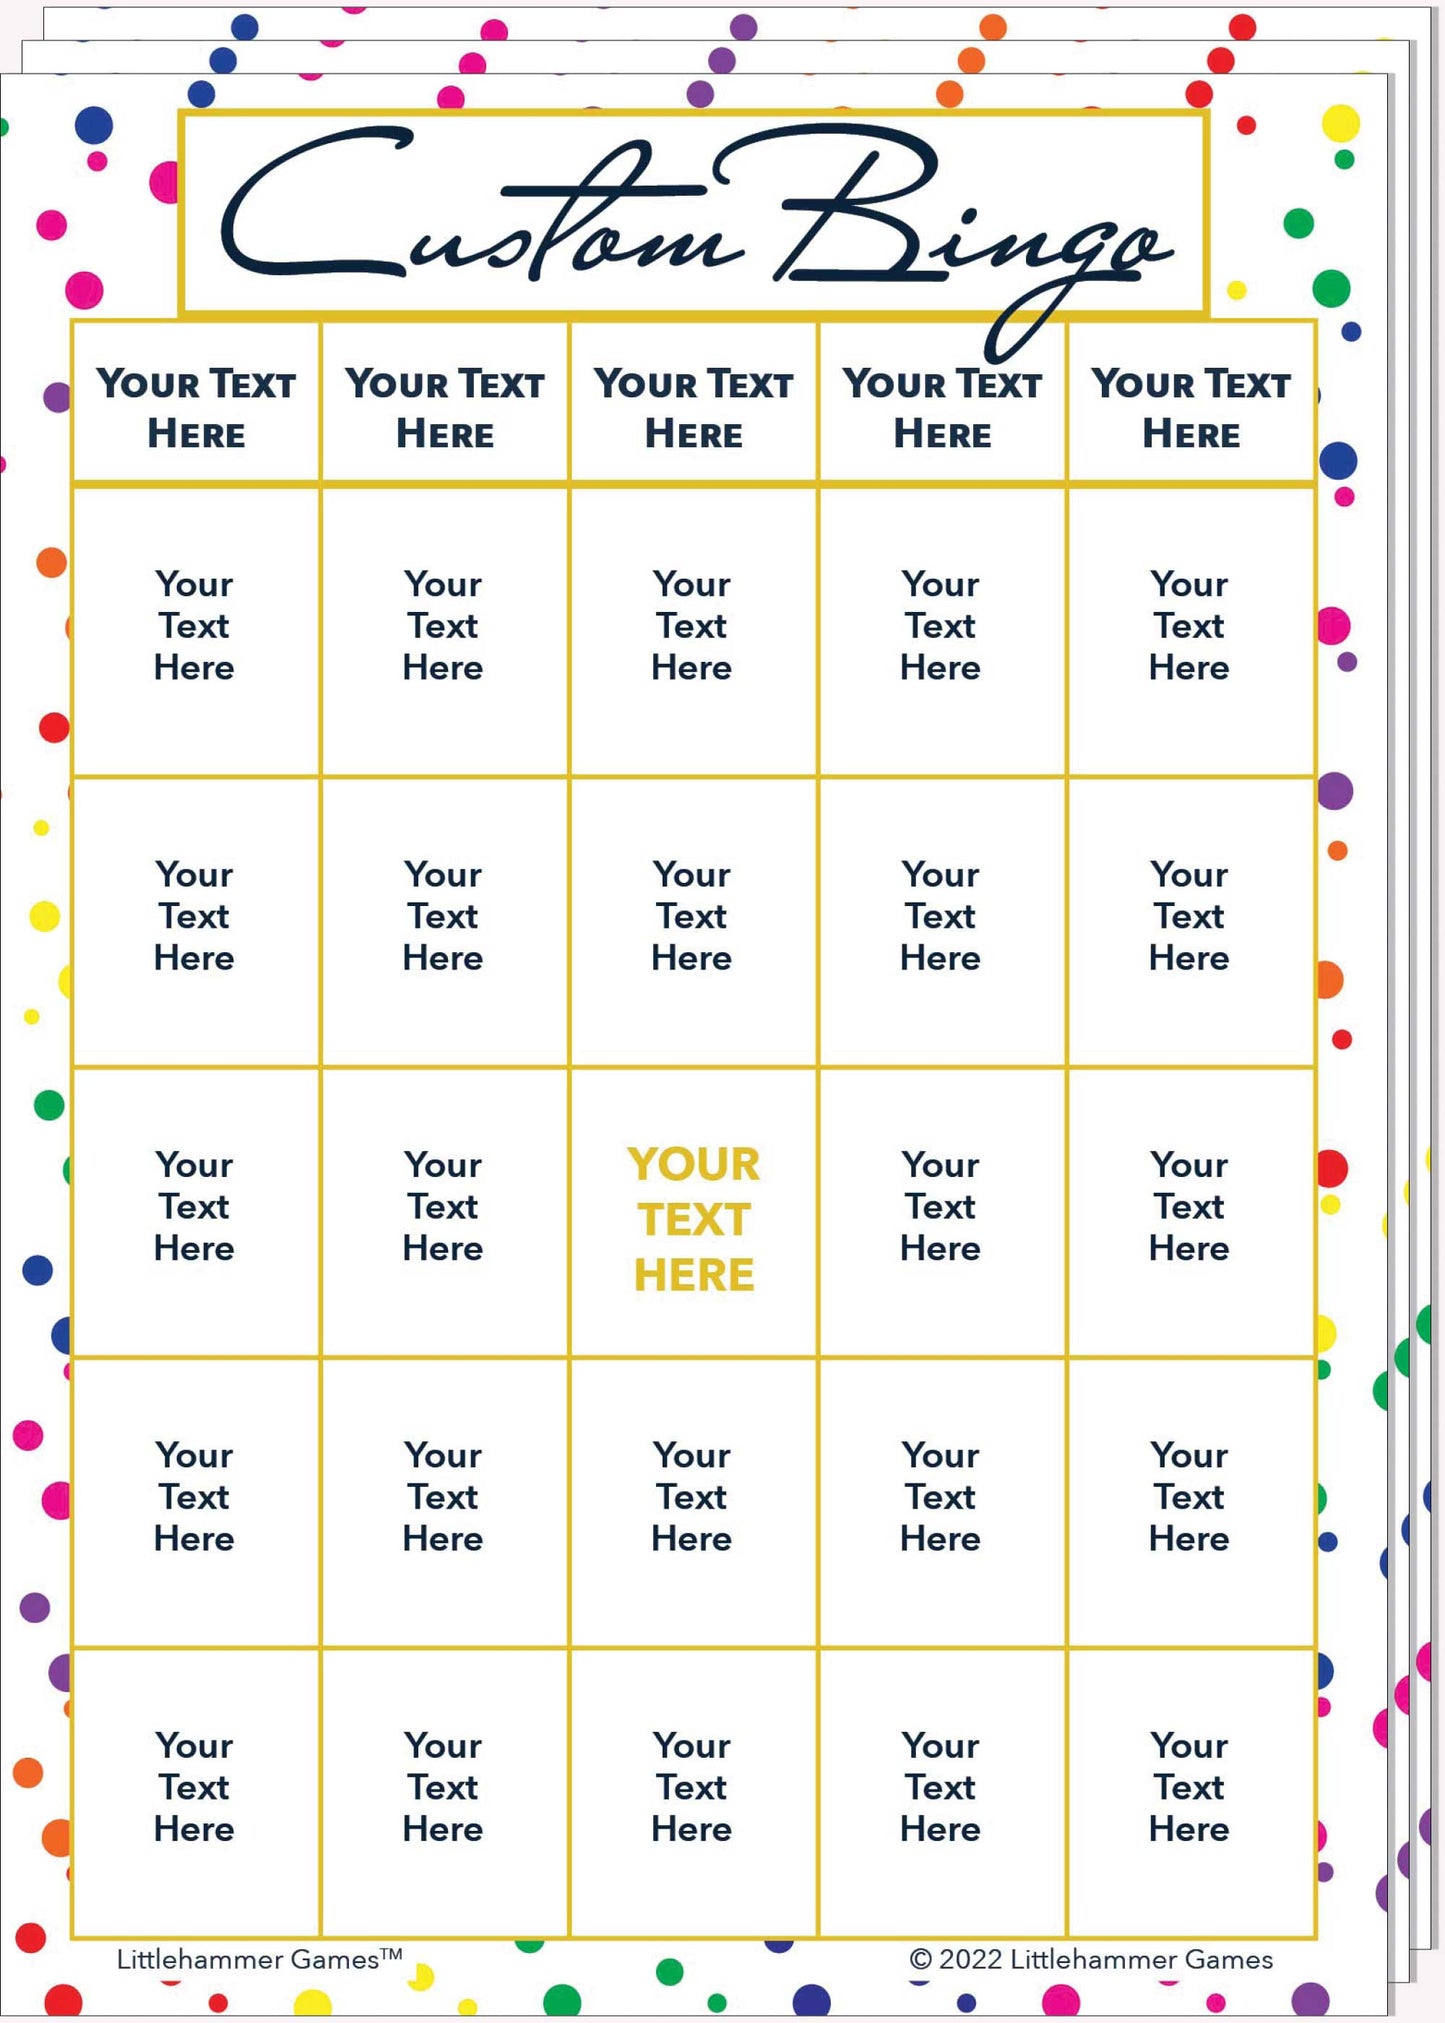 Stack of Custom Bingo game cards on a rainbow polka dot background